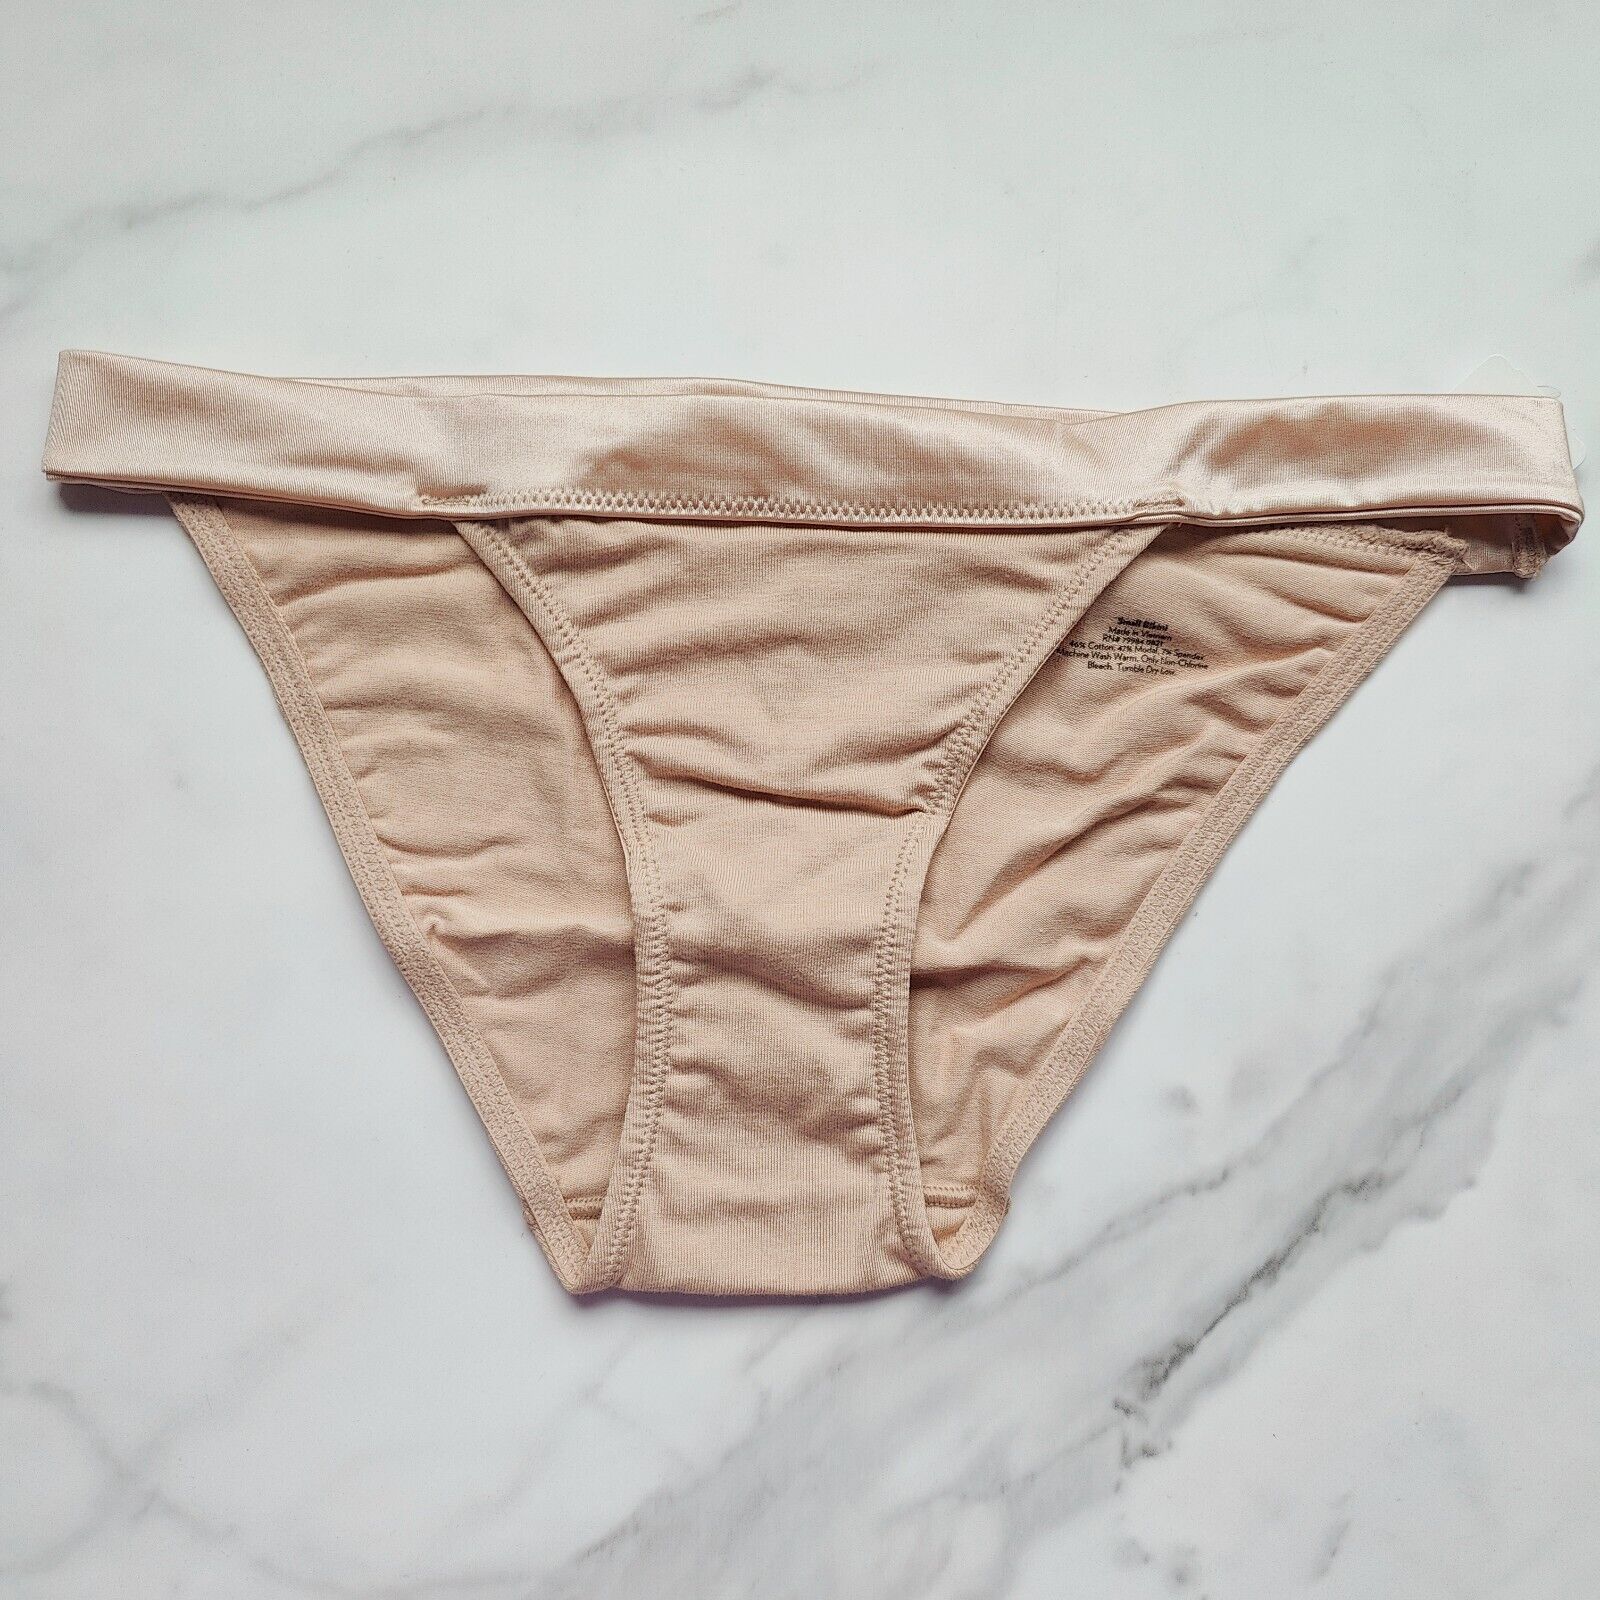 Soma TellTale The Dreamer Bikini Panty in Peekaboo Light Nude Size S/M/L/XL